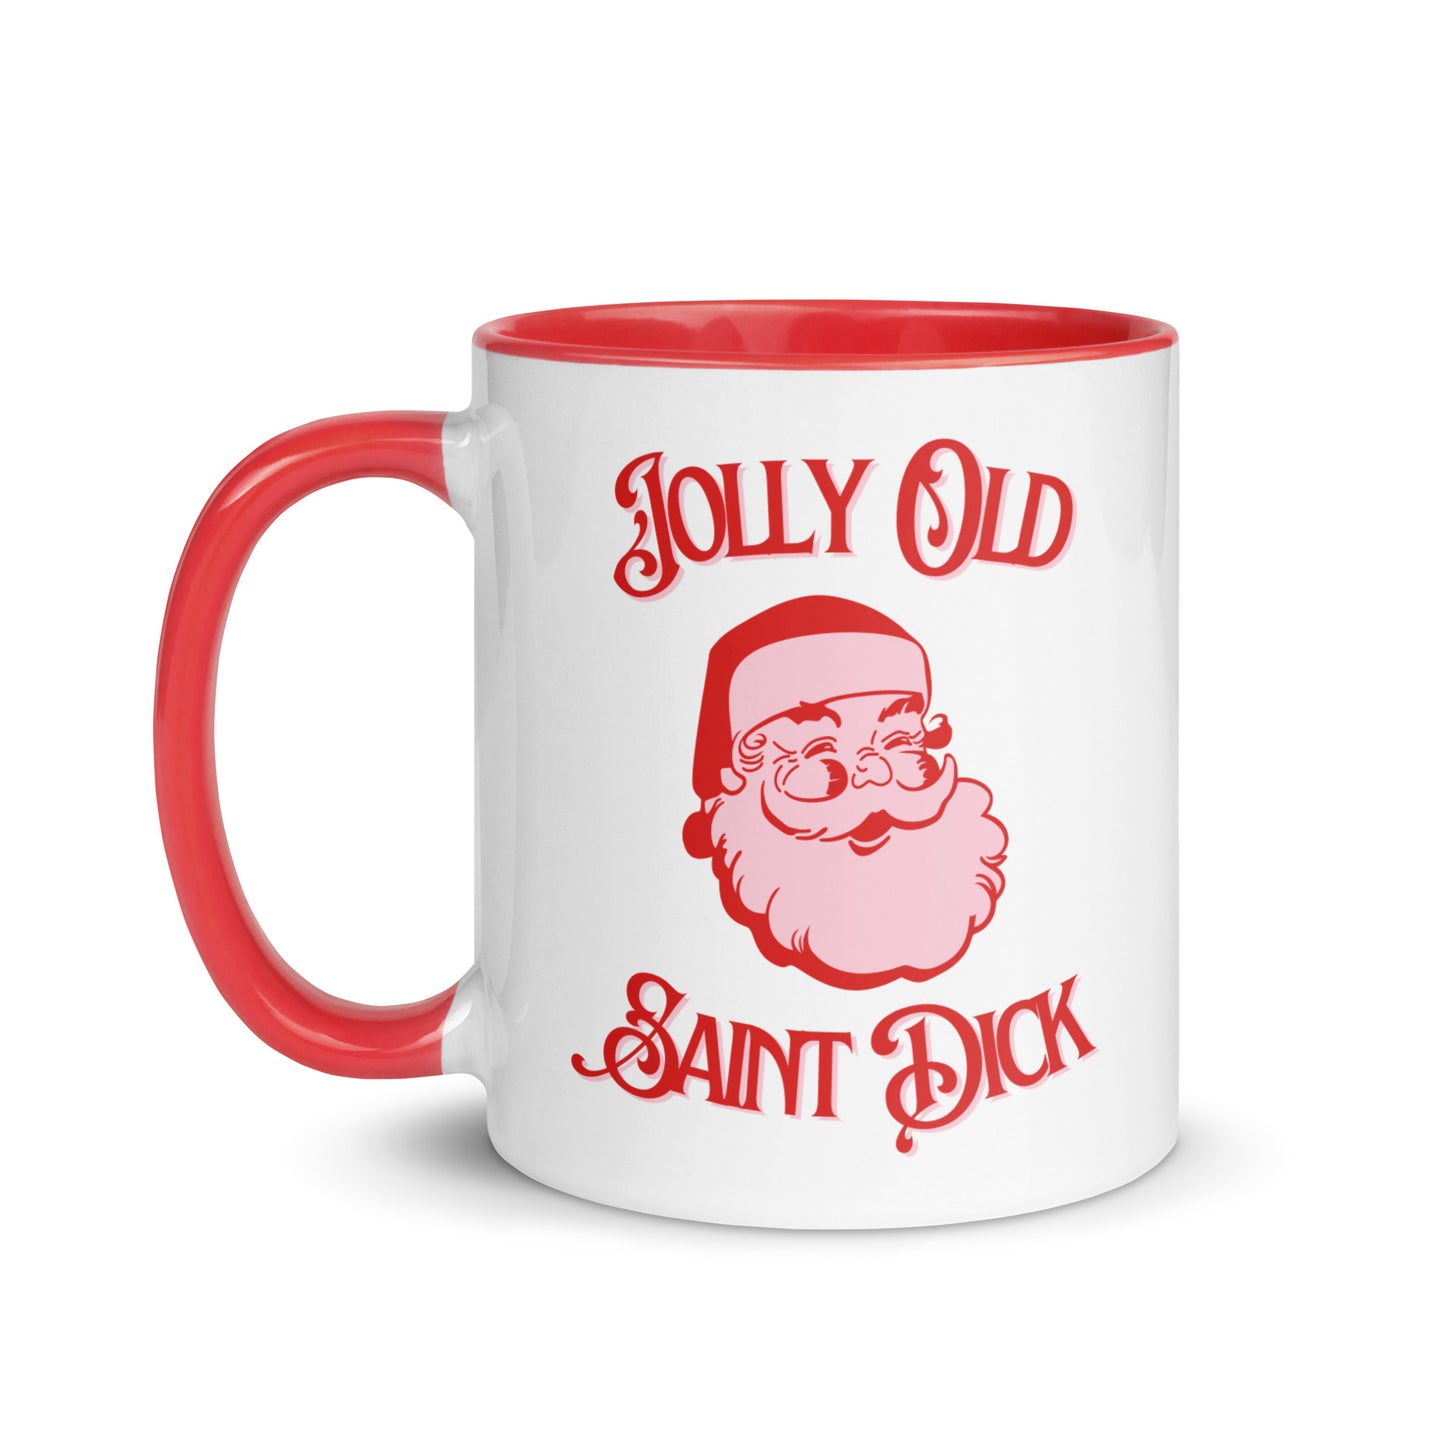 Jolly Old Saint Dick Mug